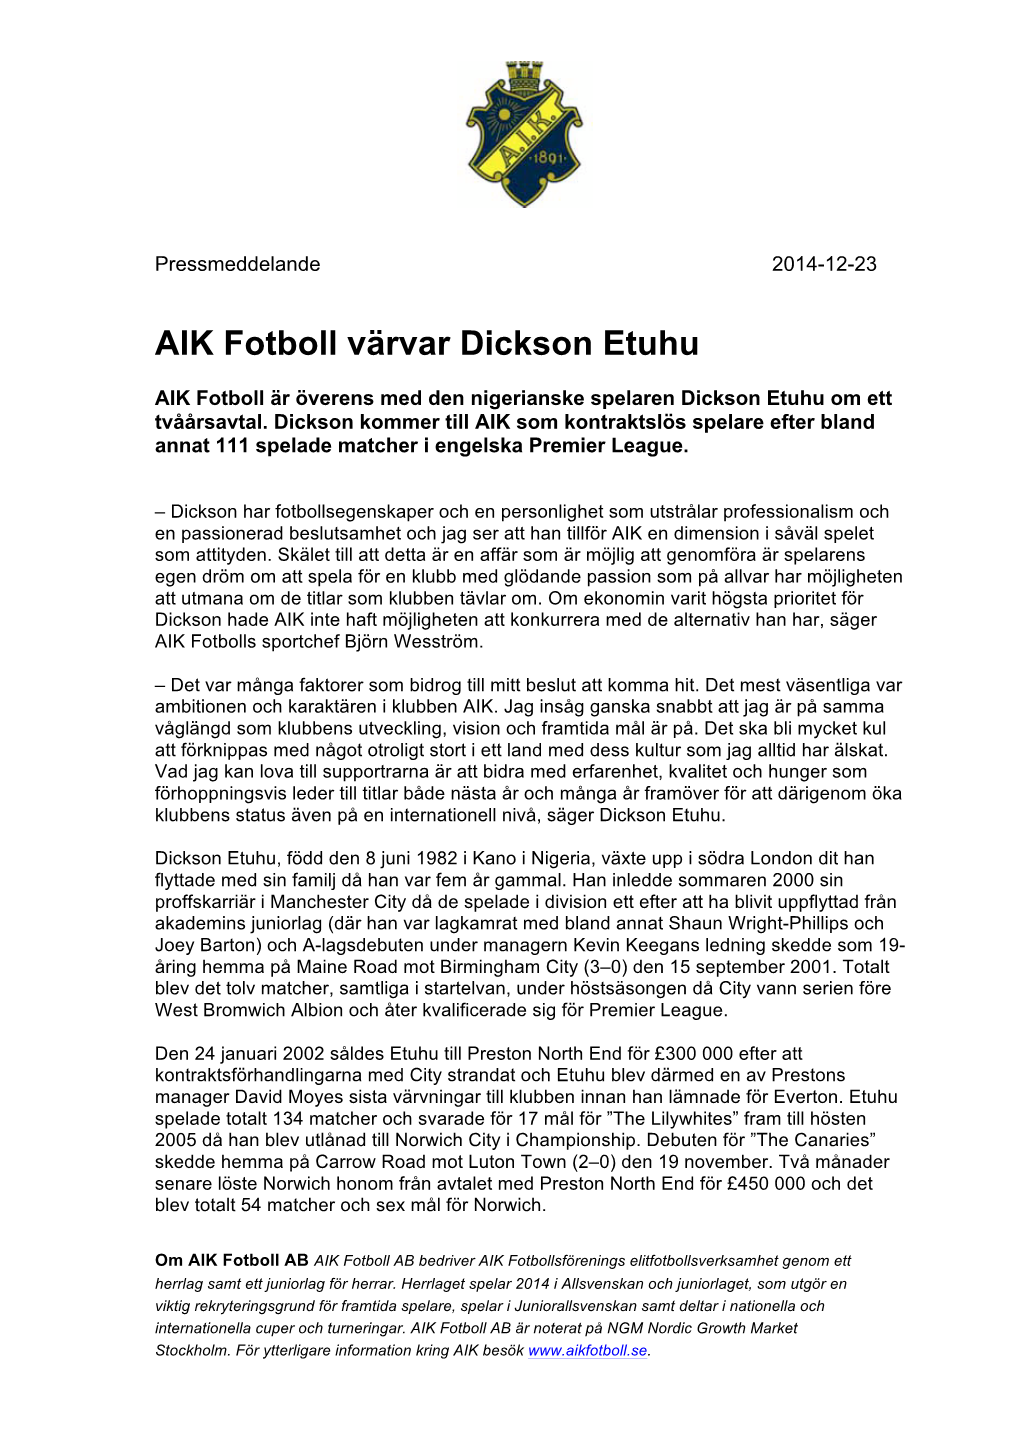 AIK Fotboll Värvar Dickson Etuhu